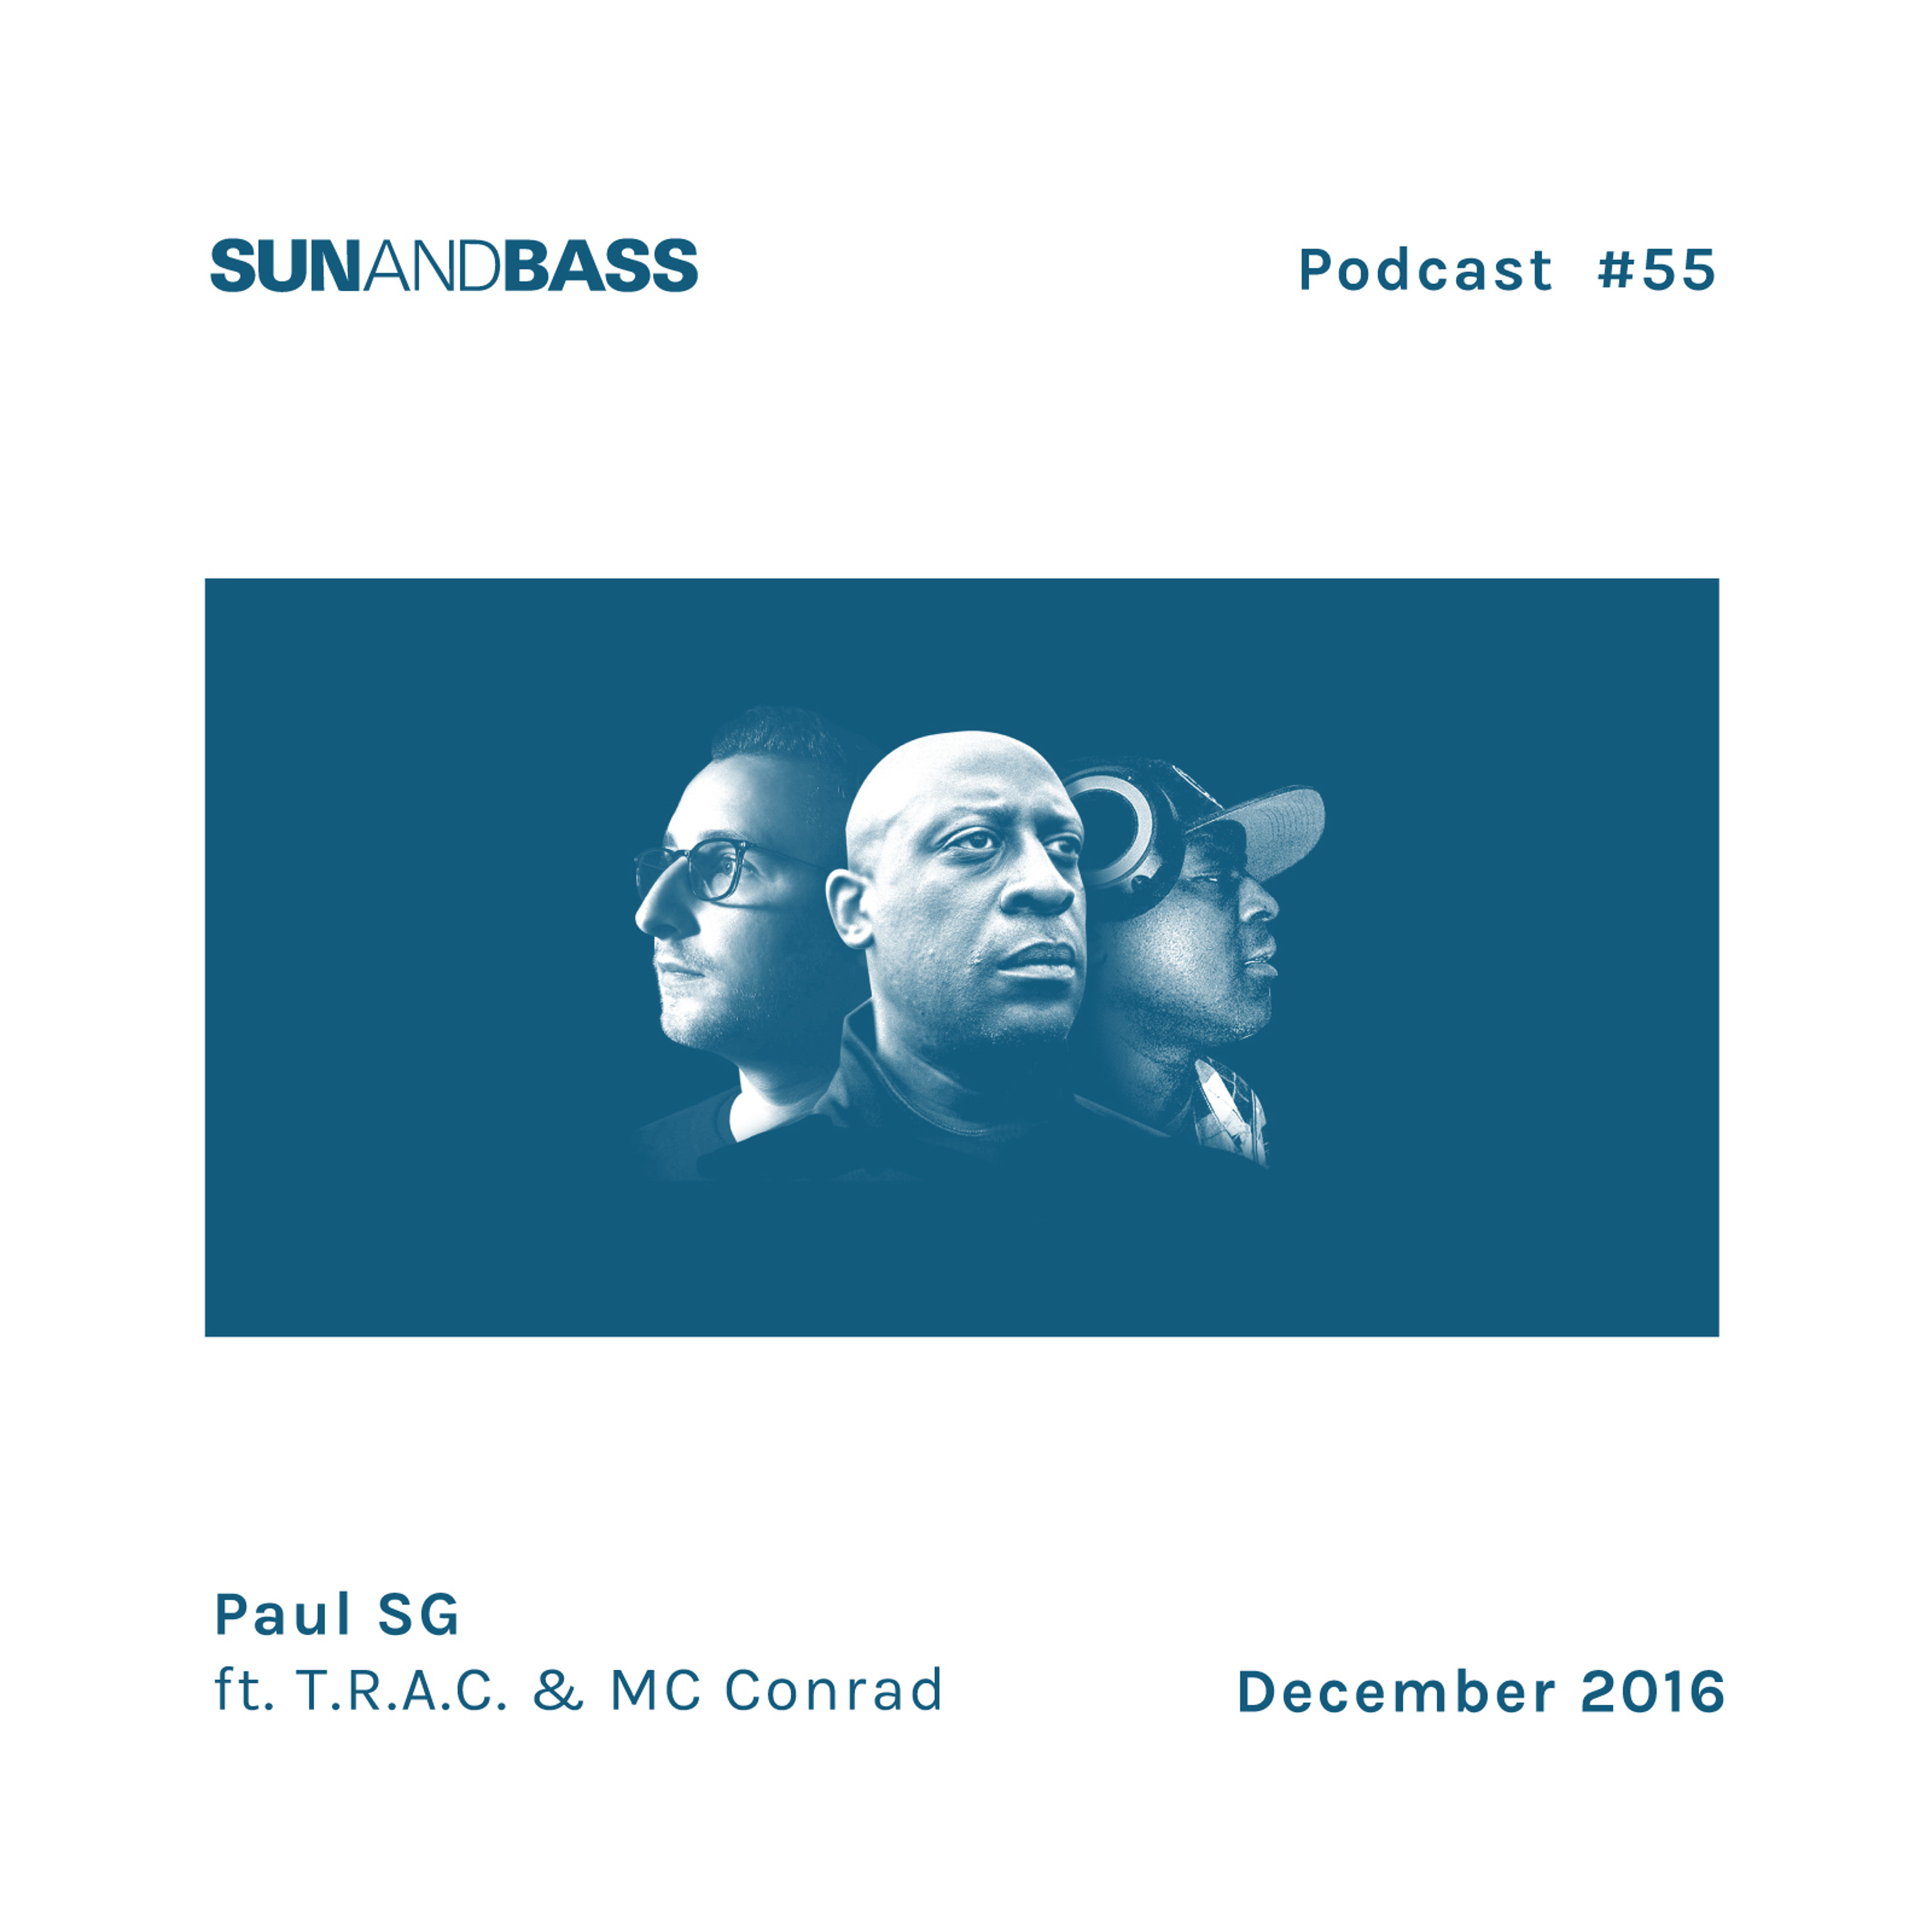 SUNANDBASS Podcast #55 - Paul SG ft. T.R.A.C & MC Conrad